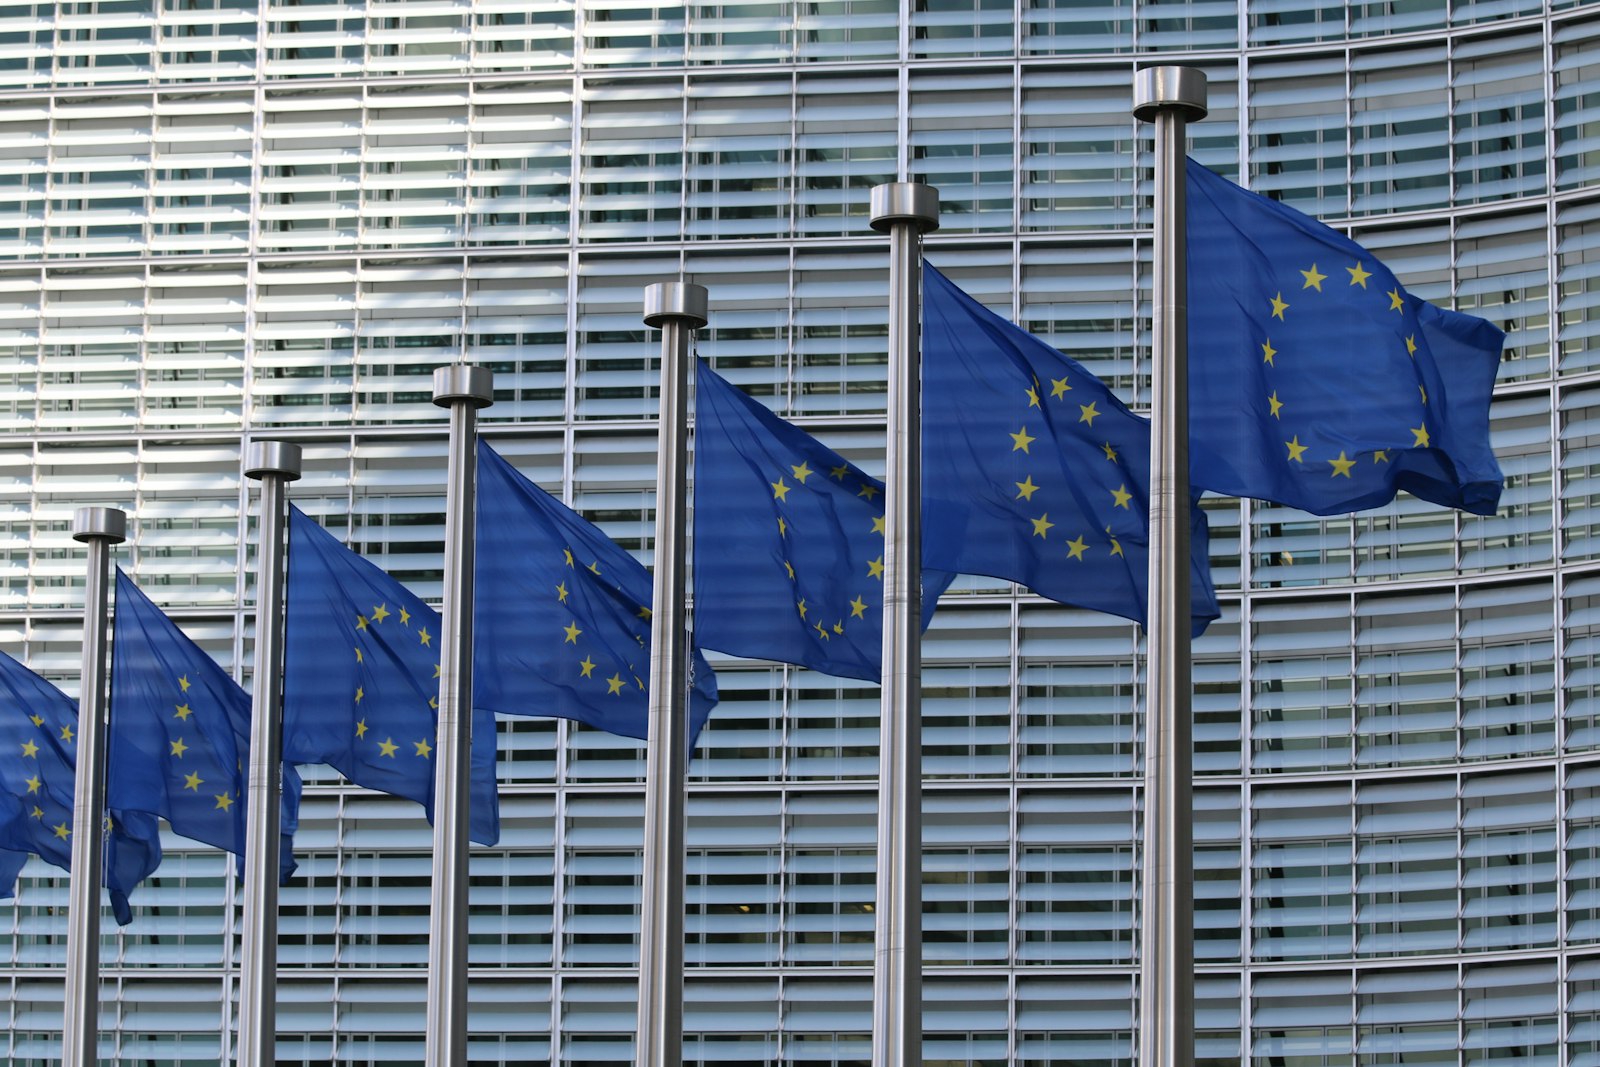 Frankfurt to Host New EU Anti-Money Laundering Agency post image